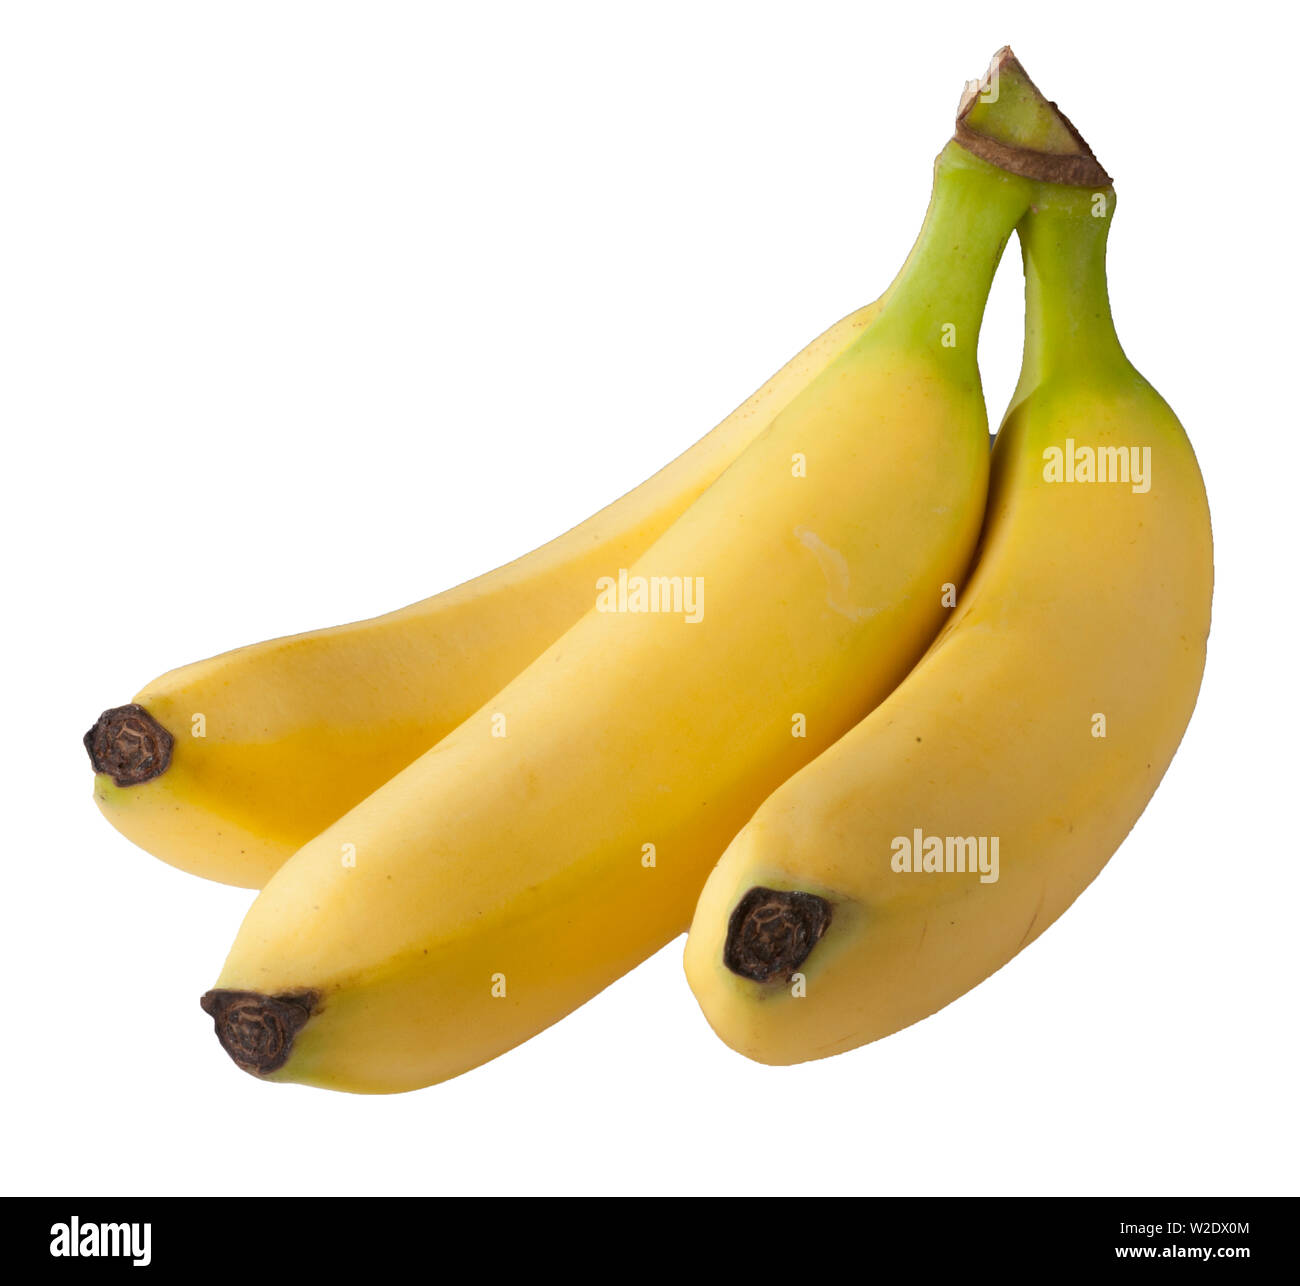 Banana bunches Stock Photo